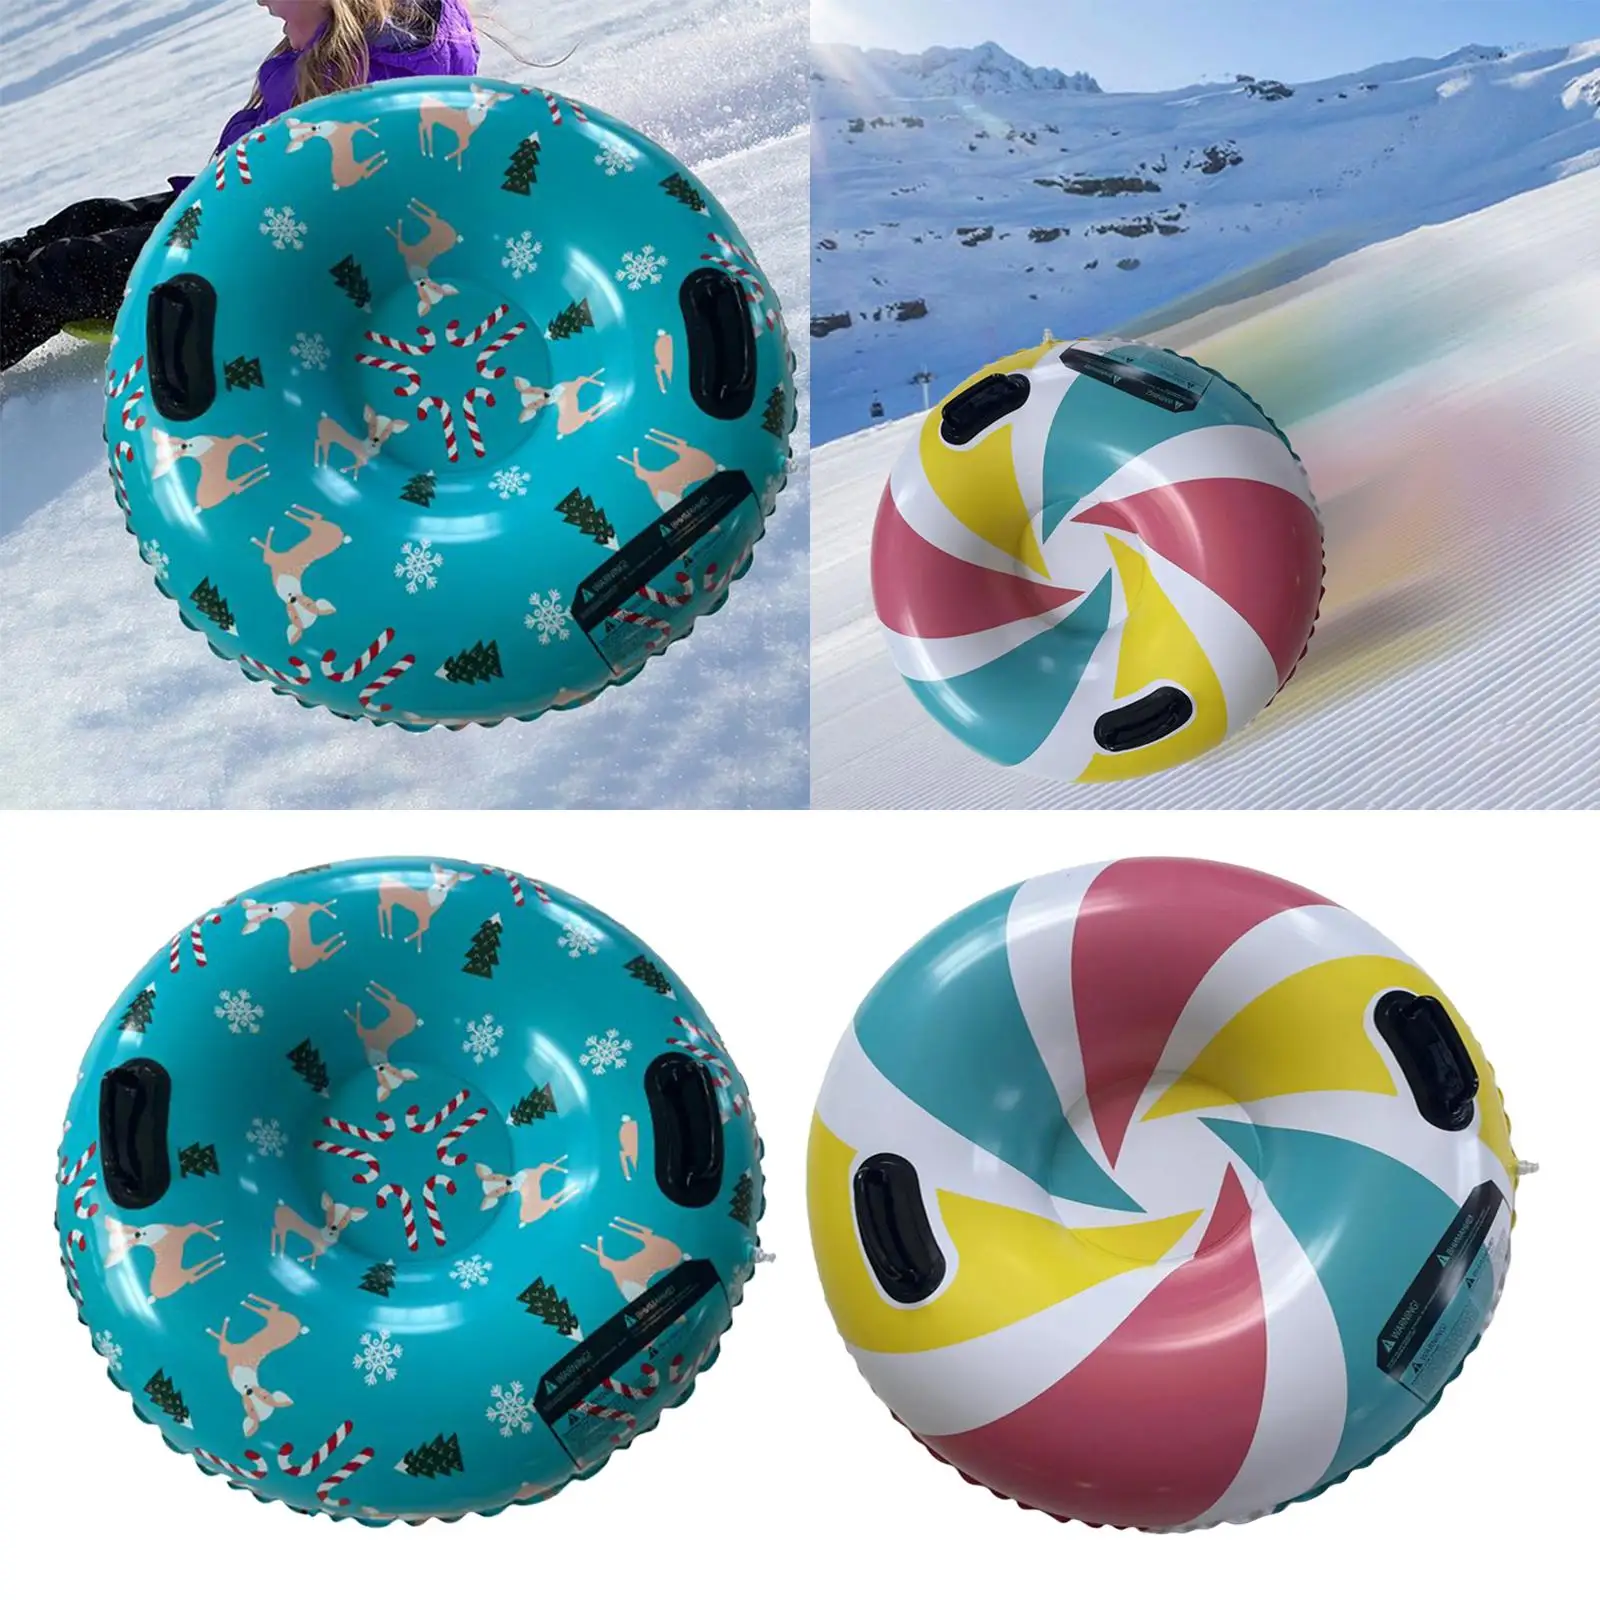 Foldable Winter Snow Tube 35.83inch Tube Sledding Skiing Inflatable Sled